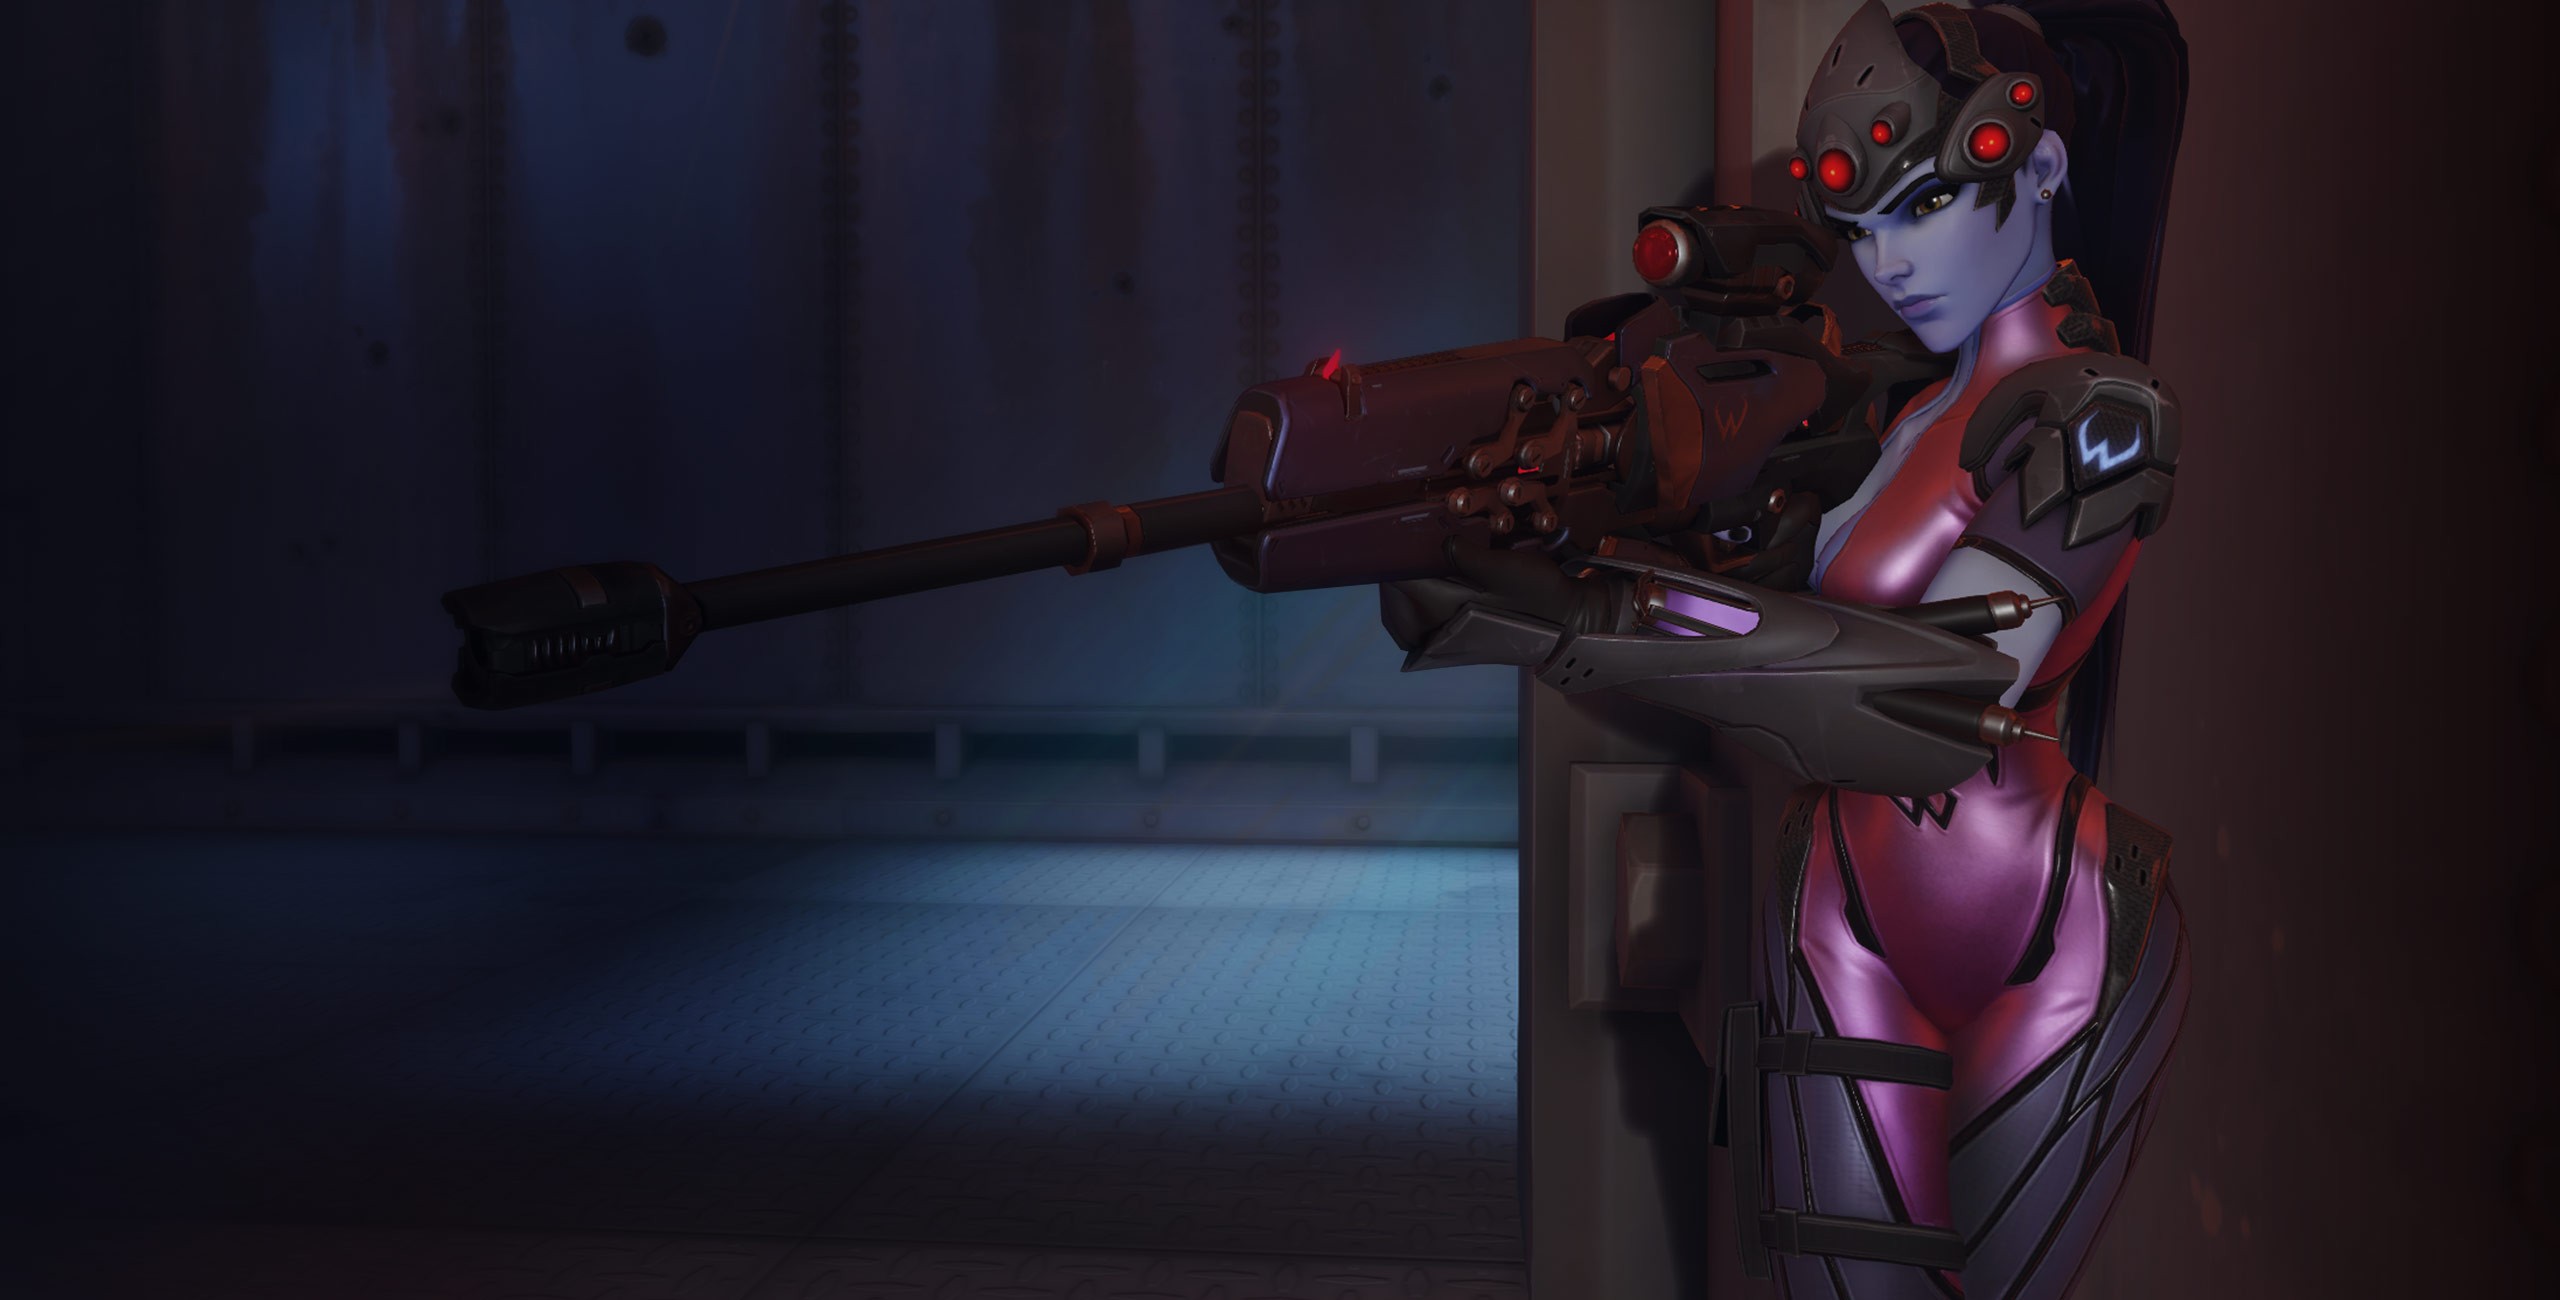 General 2560x1300 Overwatch video games Widowmaker (Overwatch) PC gaming video game art rifles sniper rifle girls with guns aiming video game girls